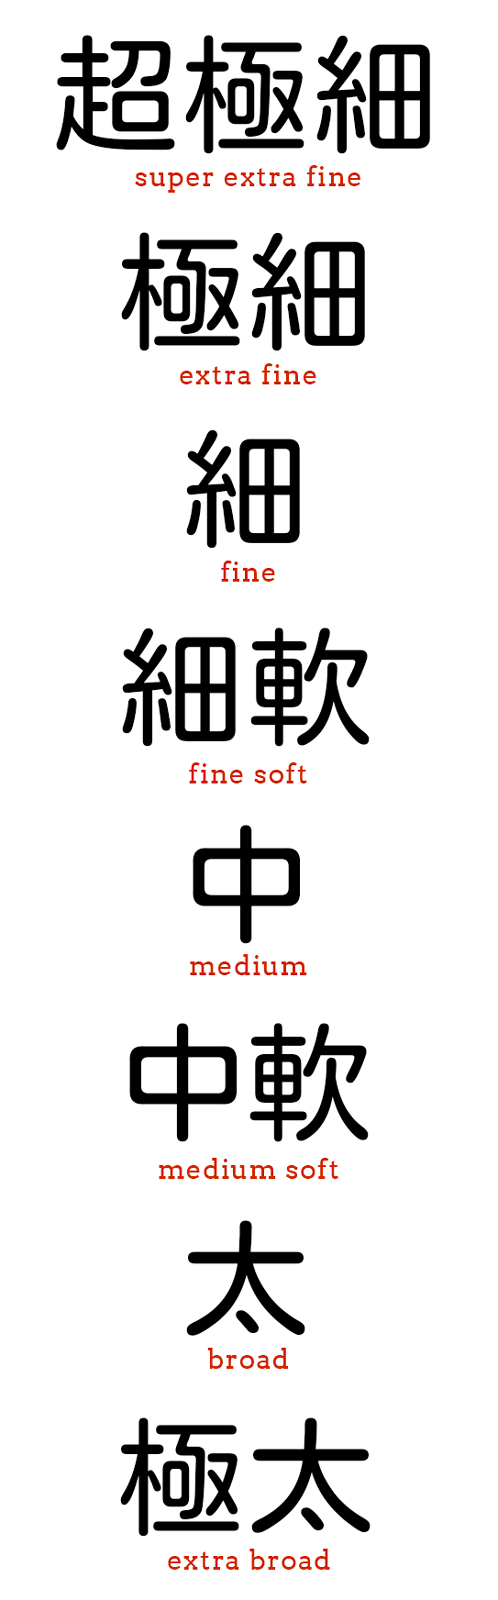 Japanese kanji nib width markings & their translations into English